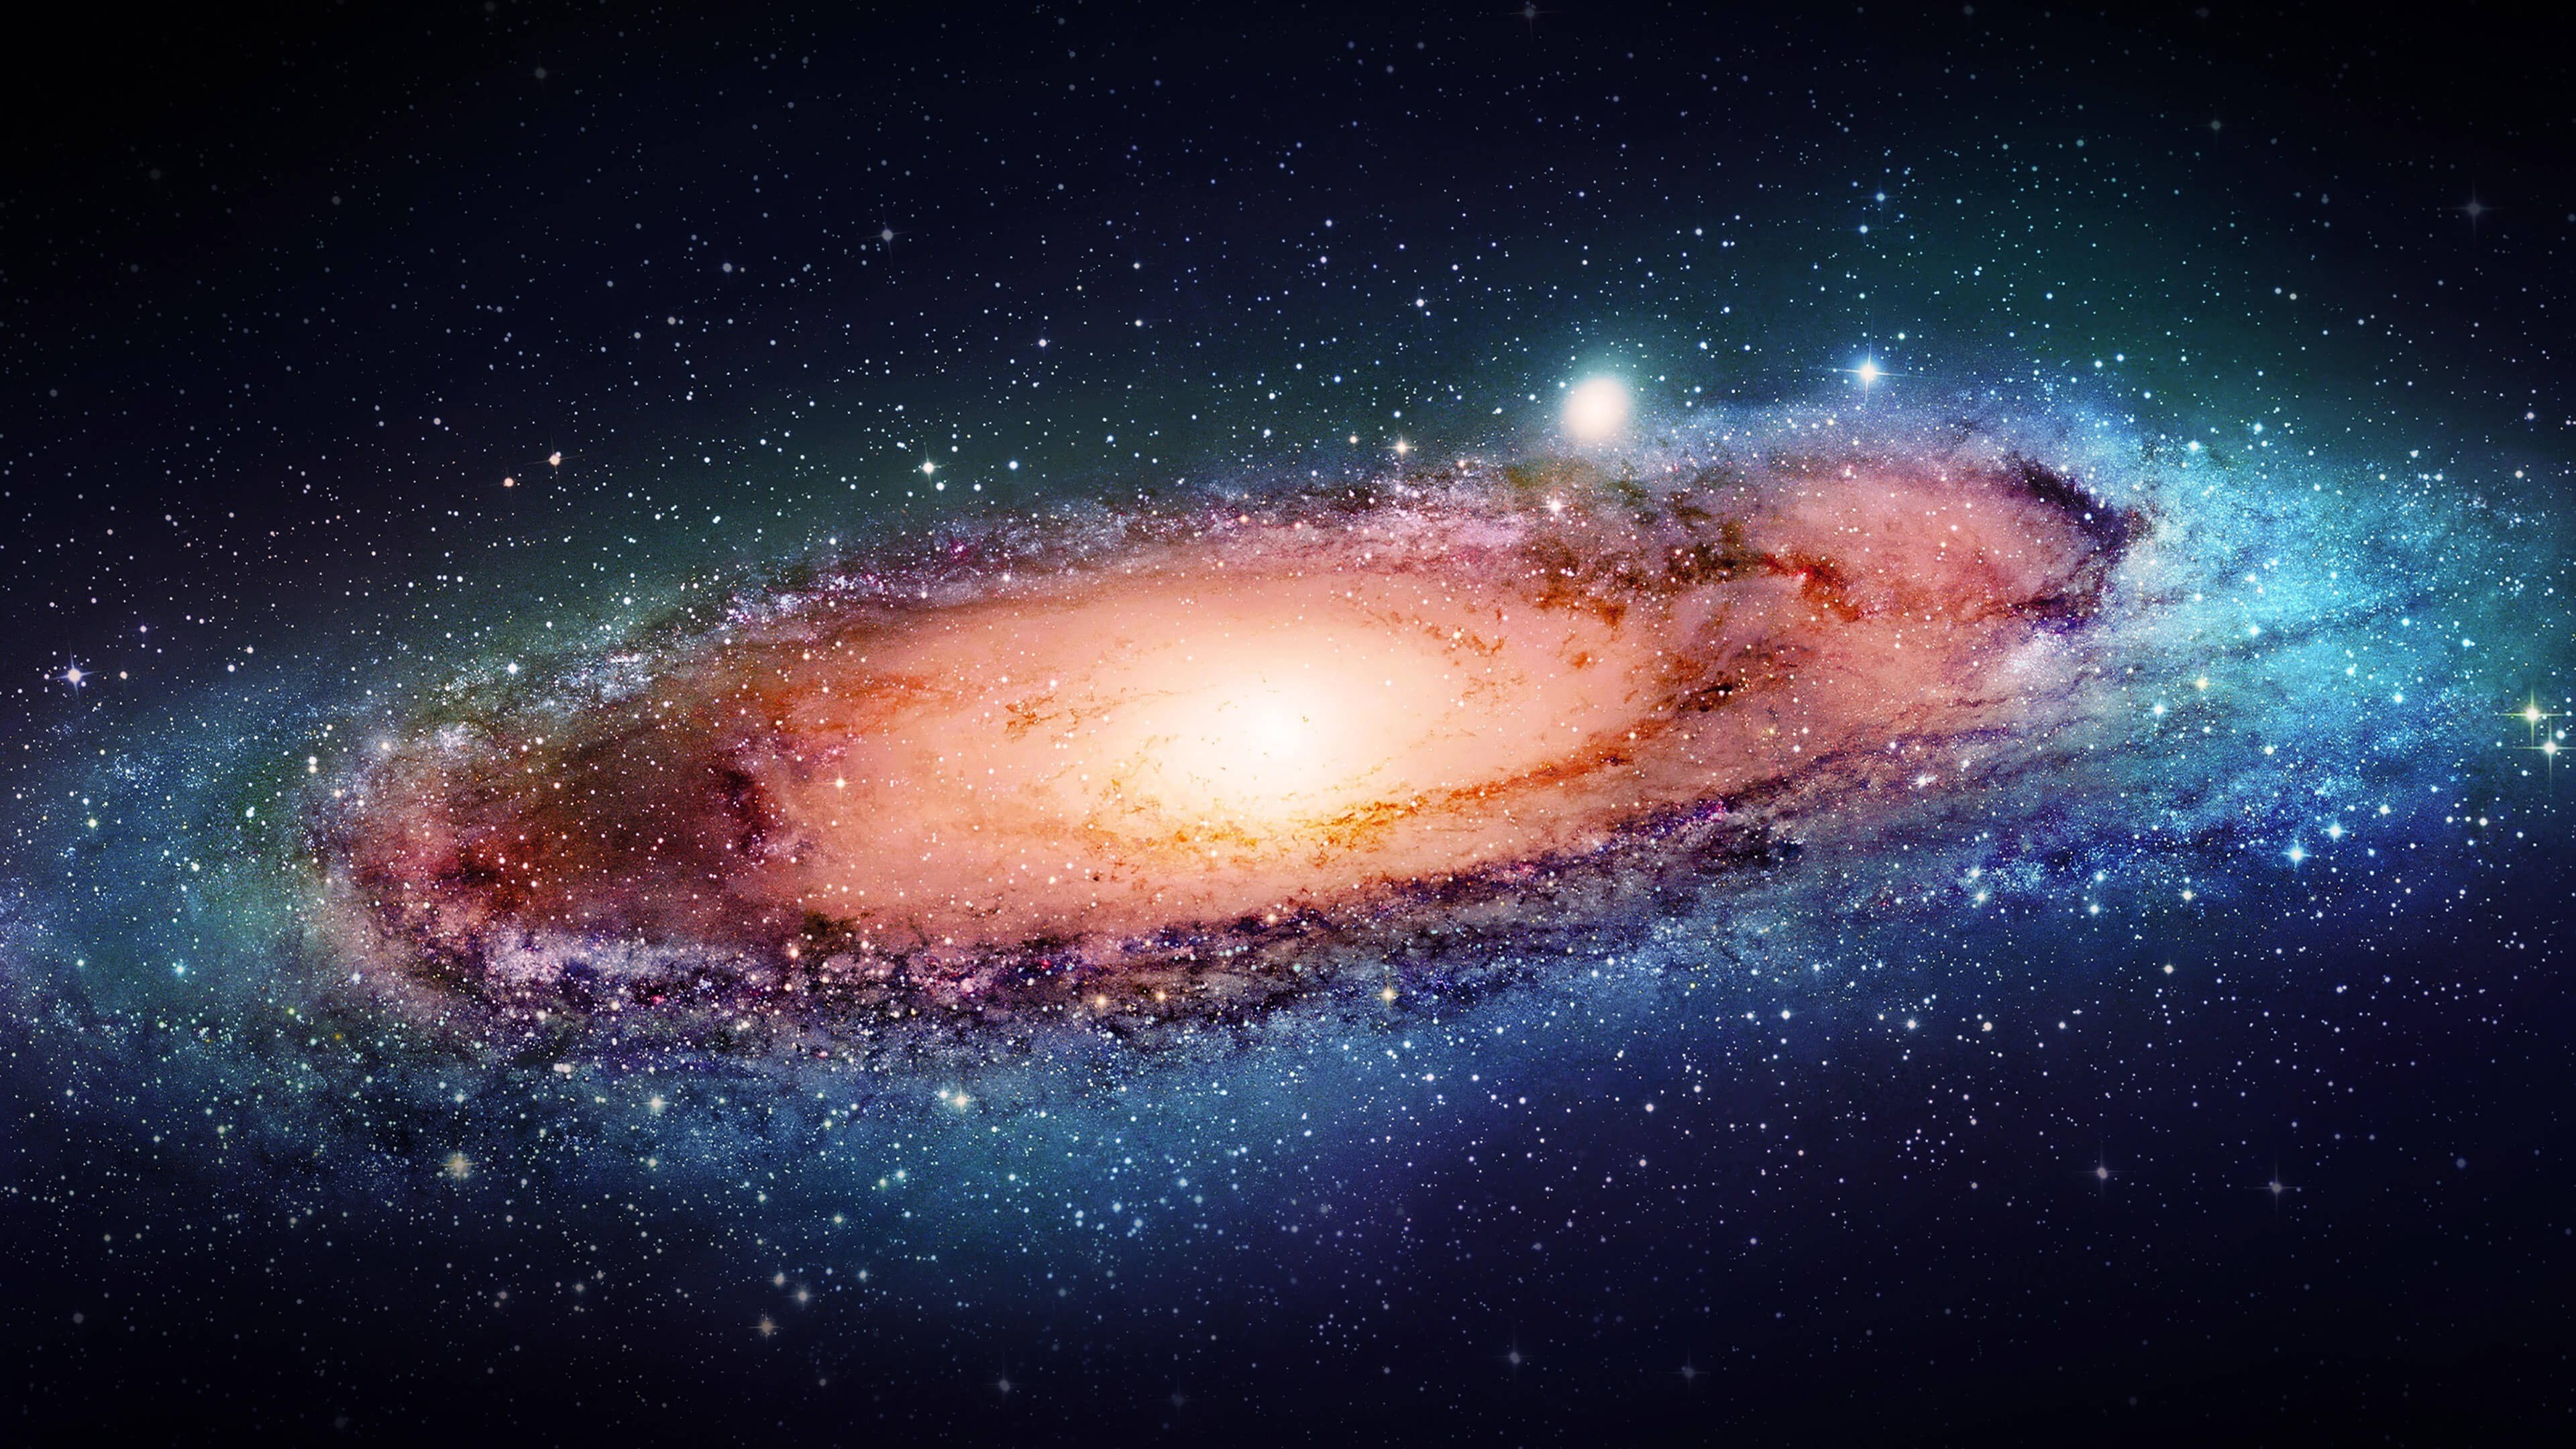 Milky Way Galaxy for 3840 x 2160 4K Ultra HDTV resolution